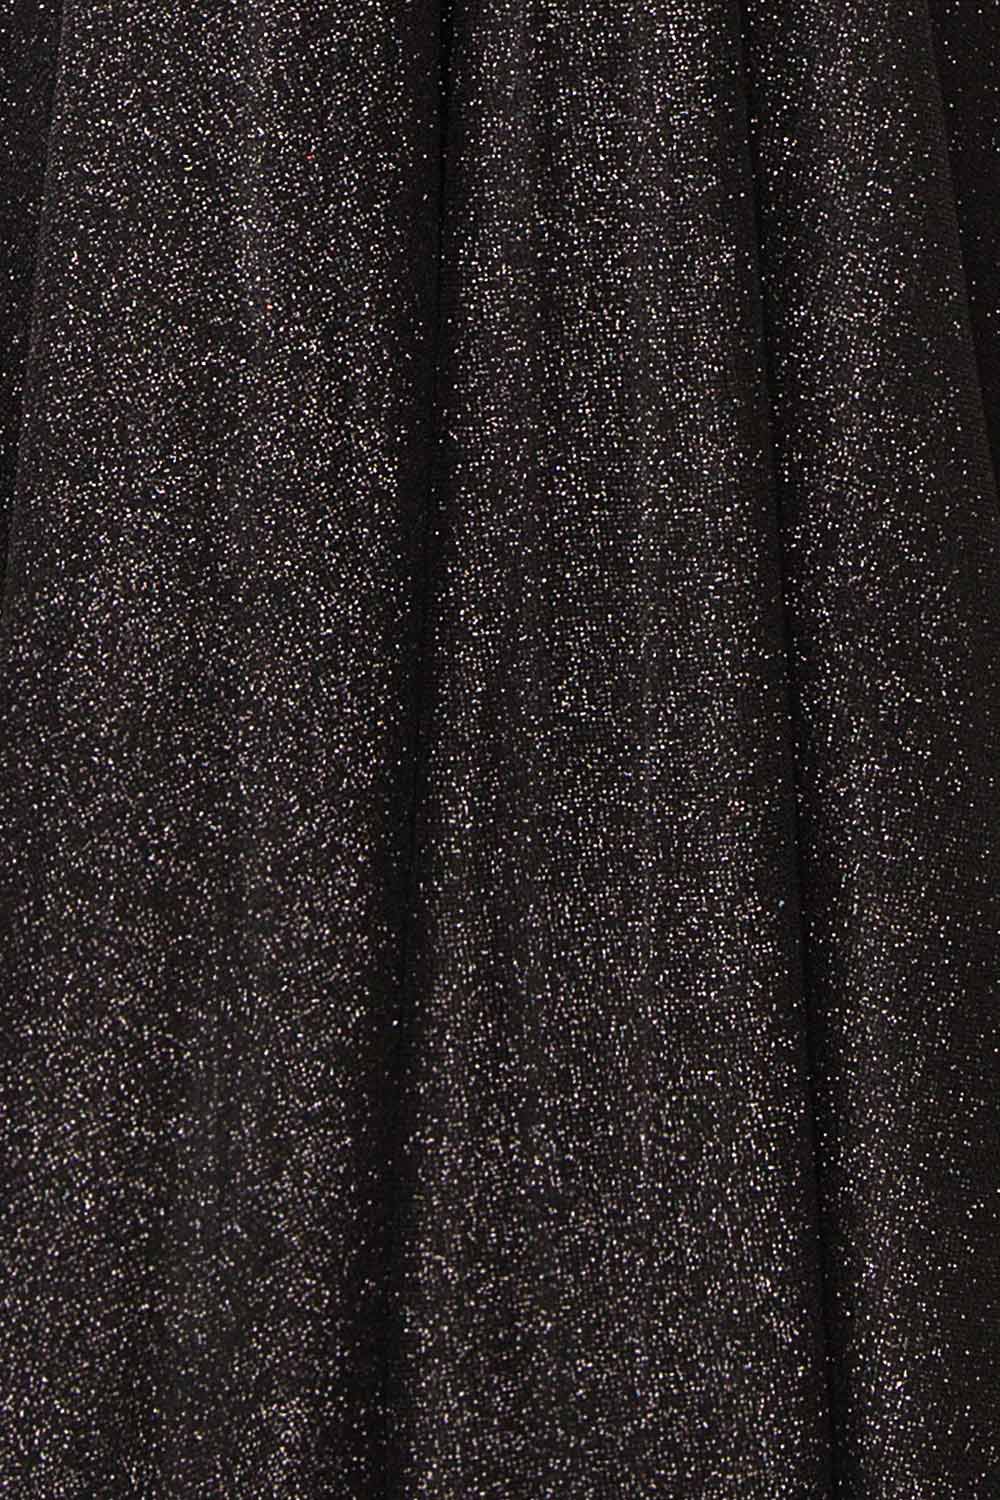 Lexy Black Sparkly Cowl Neck Maxi Dress | Boutique 1861 fabric